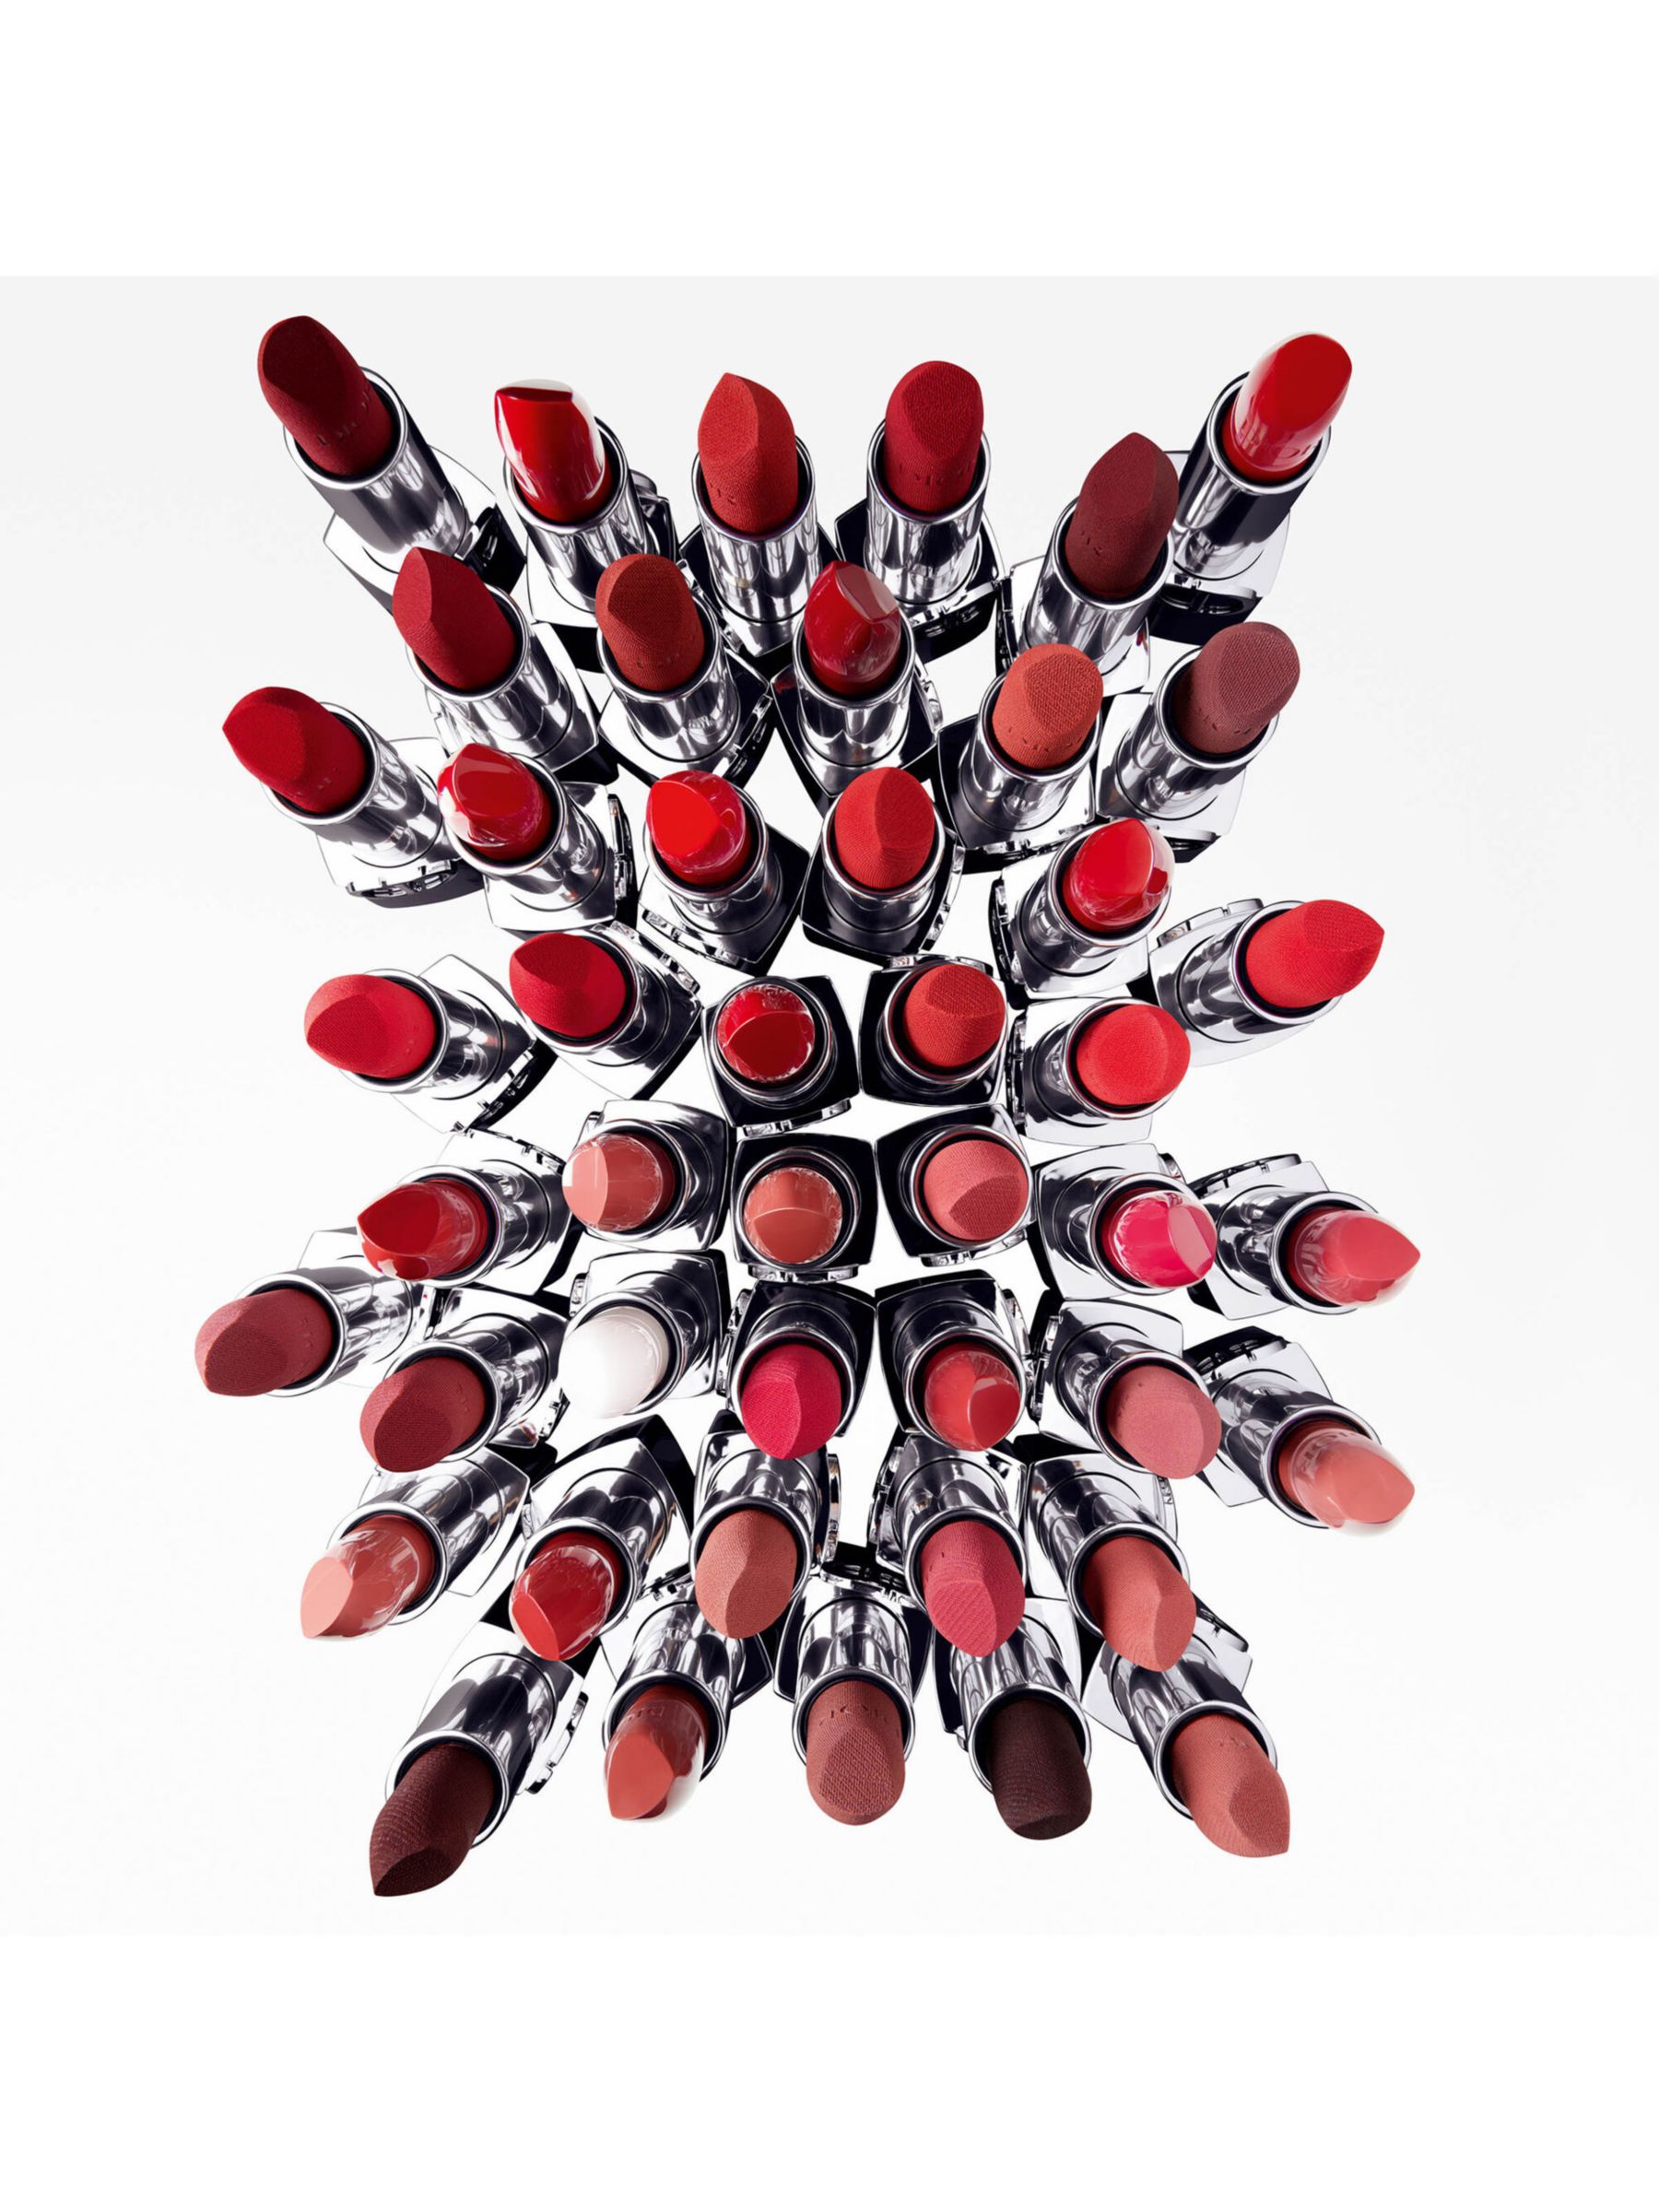 DIOR Rouge Dior Couture Colour Lipstick Refill - Satin Finish, 458 Paris 6